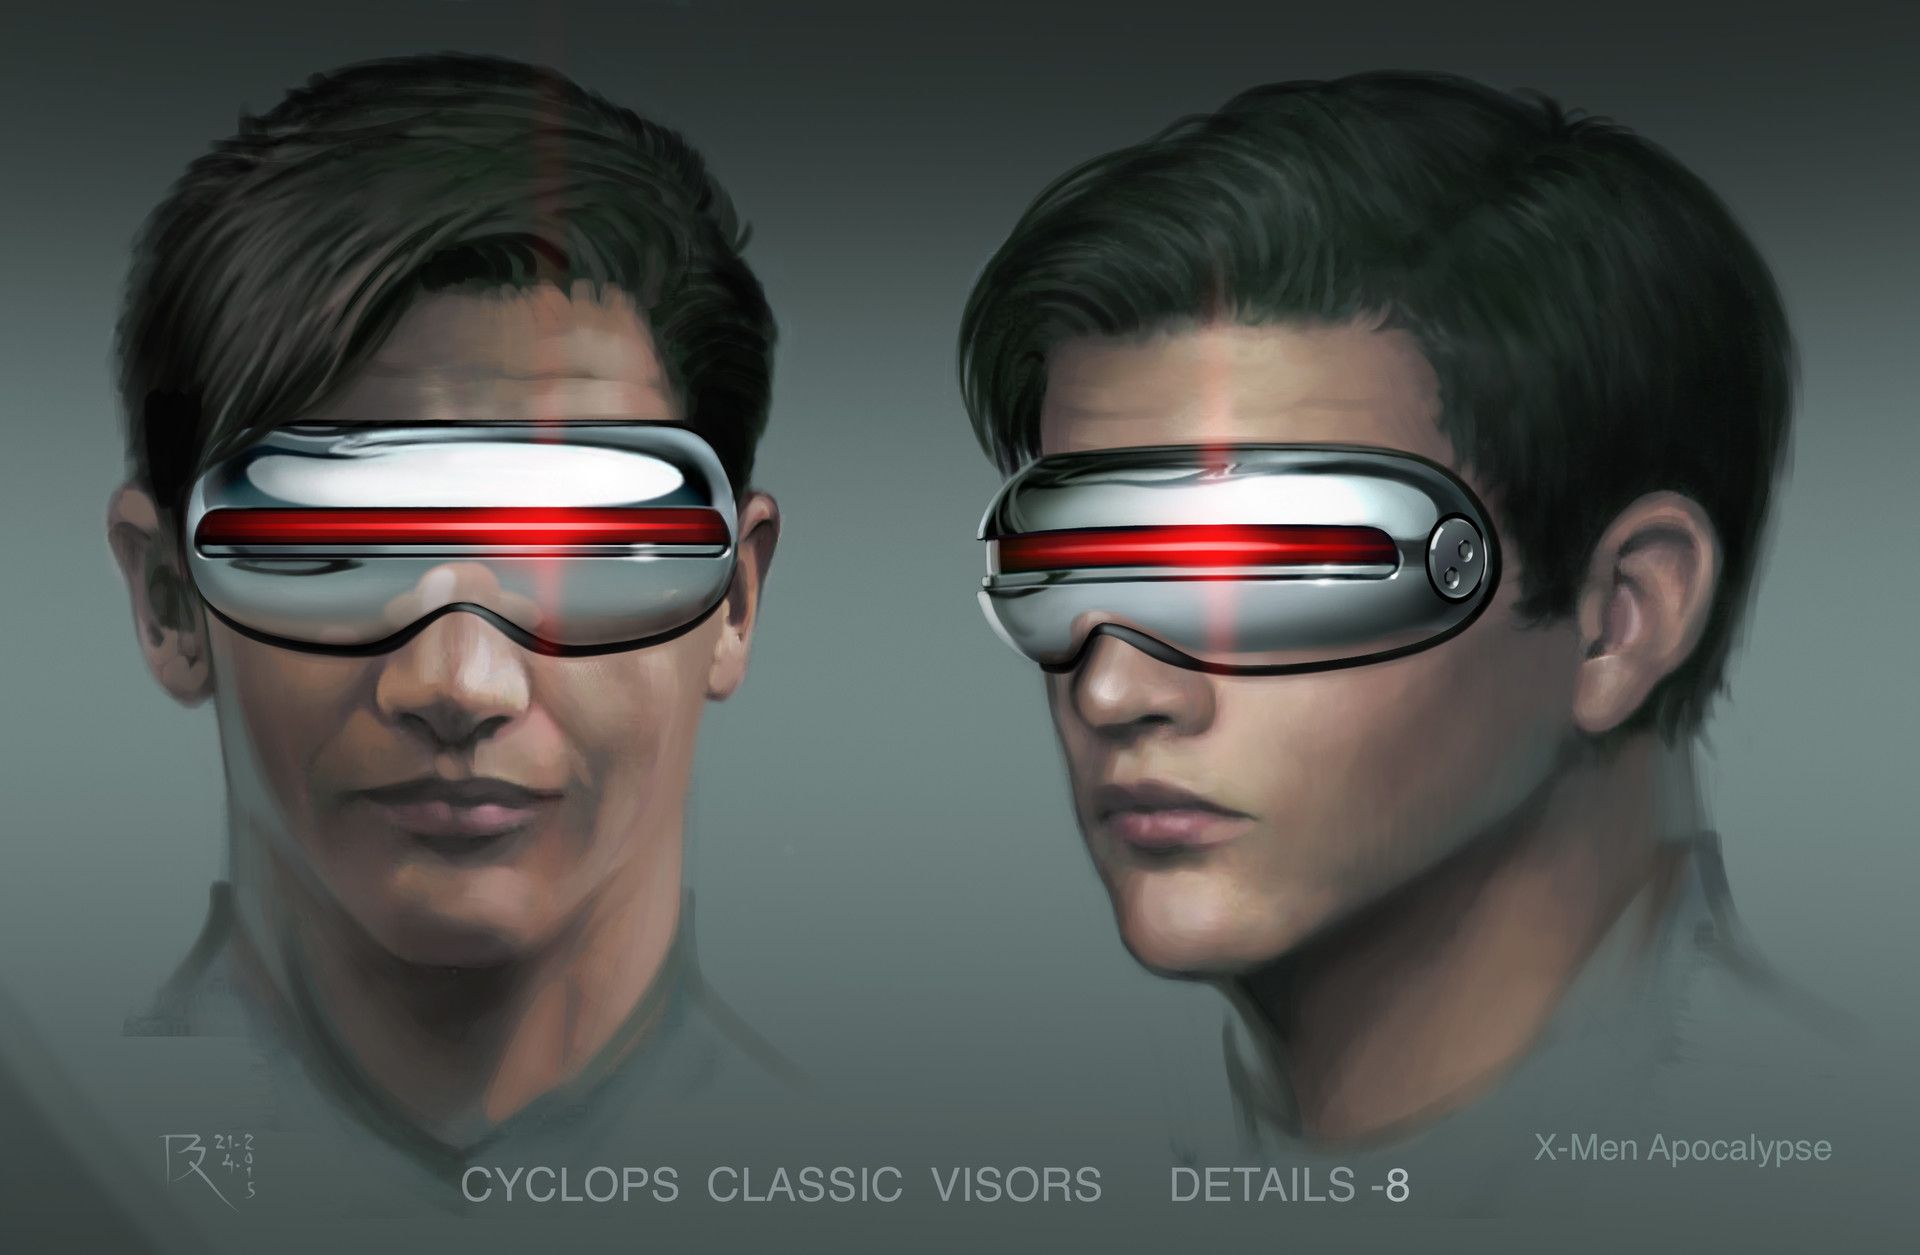 Cyclops Visor Concept by Bartol Rendulic